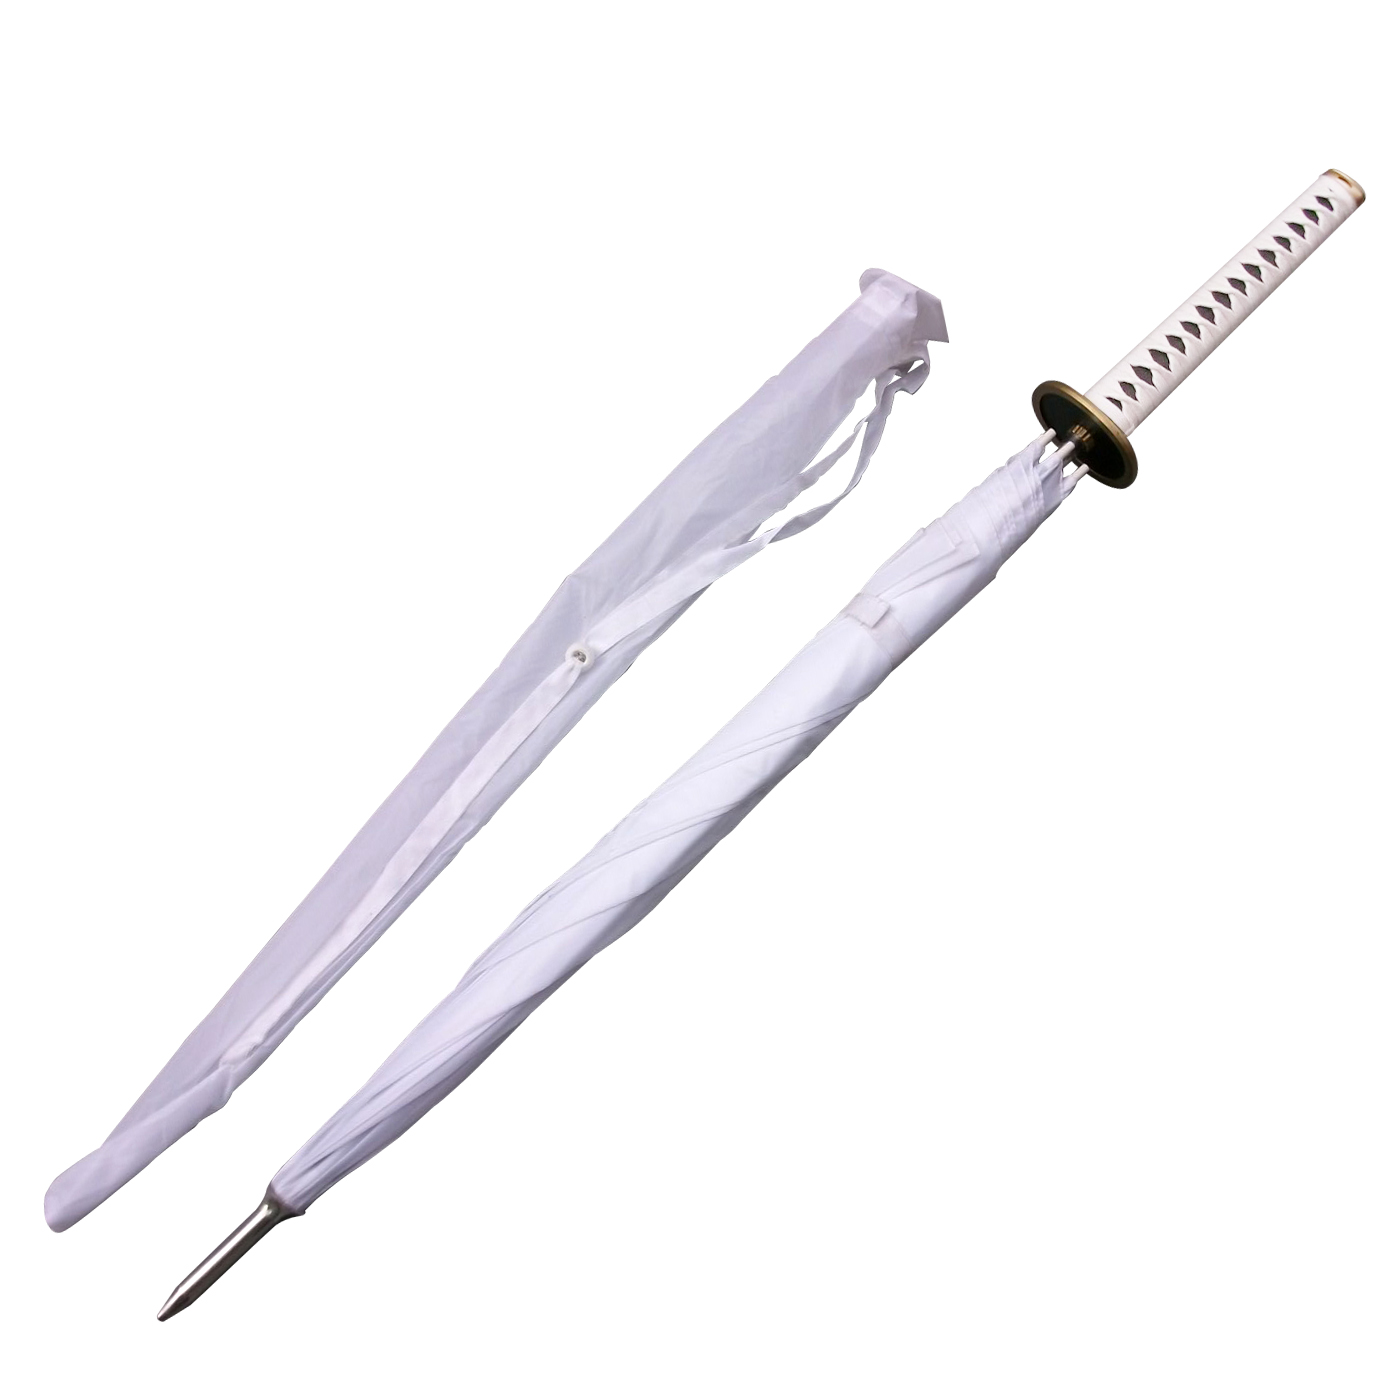 One Piece Roronoa Zoro Three Sword Style Anime Samurai Umbrella Sword